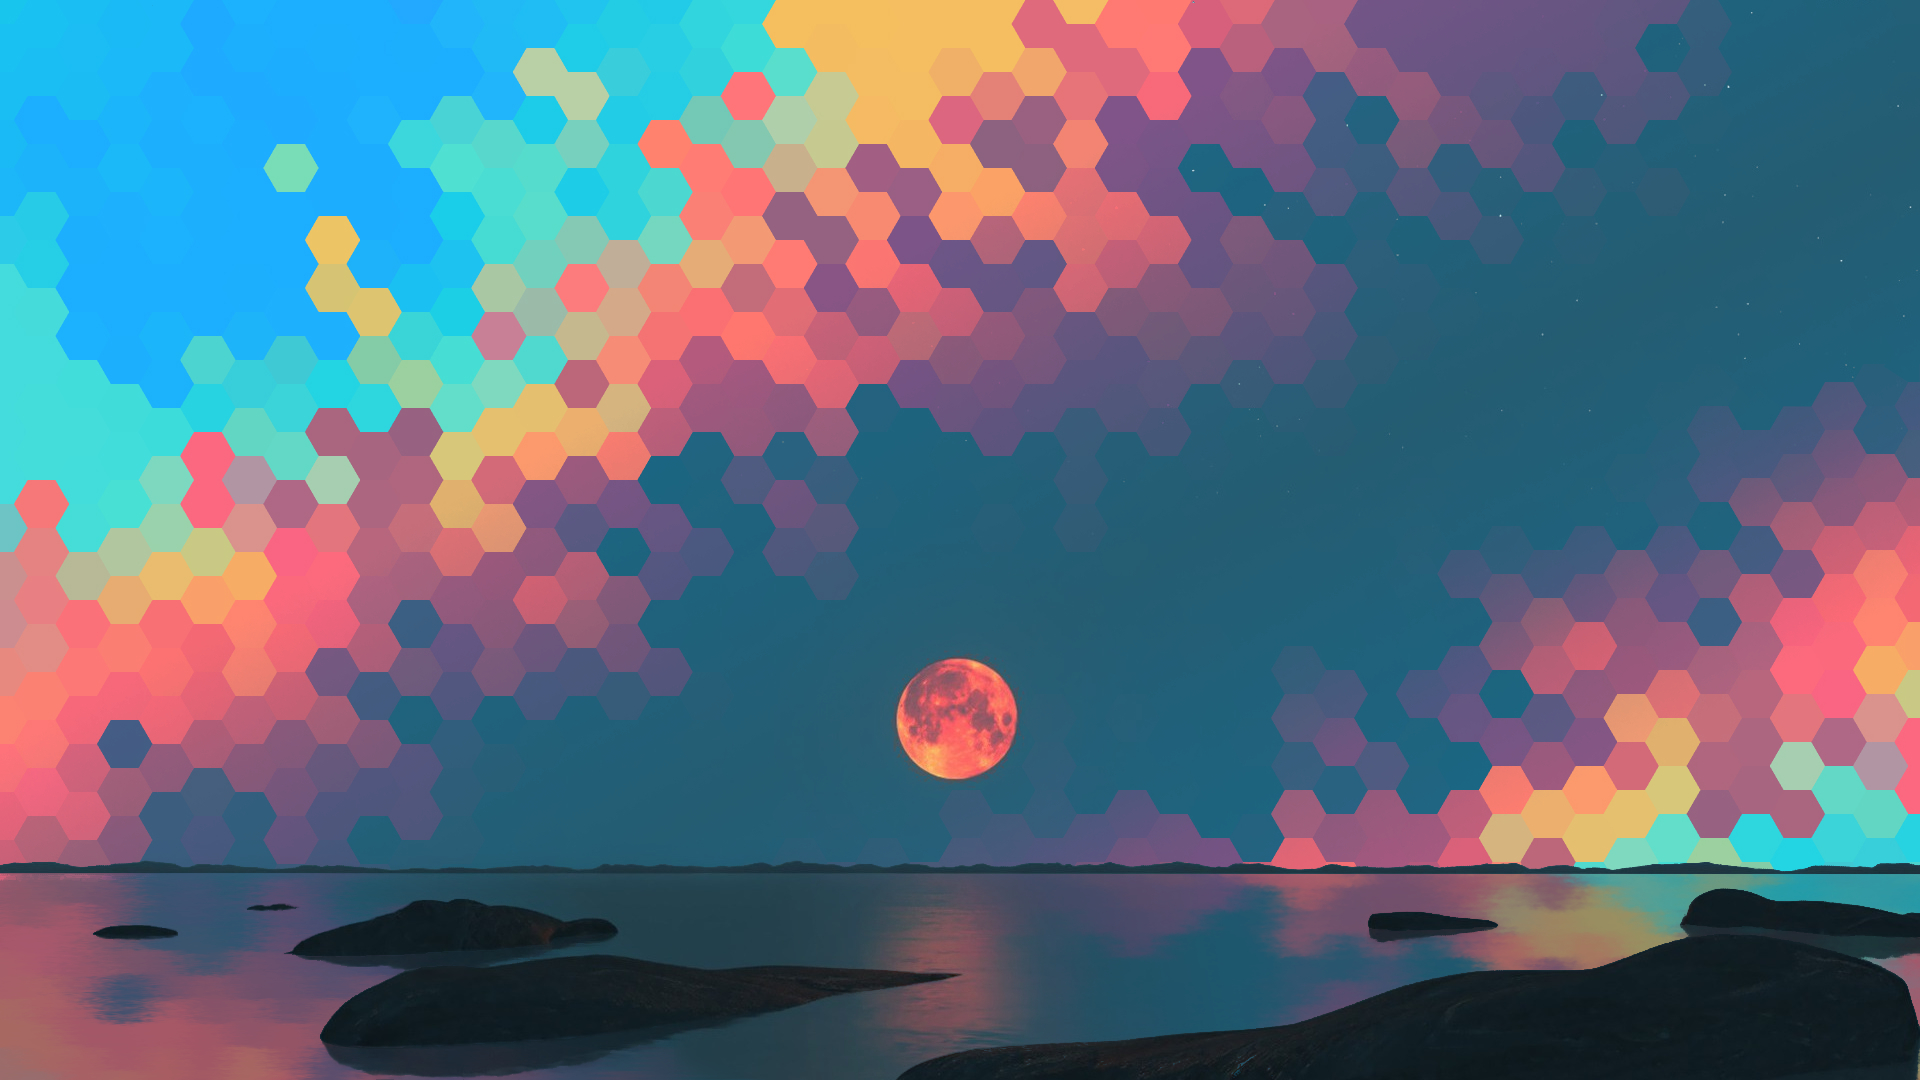 cyan, geometry, sea, orange (color), hexagon, abstract, moon, sky, teal